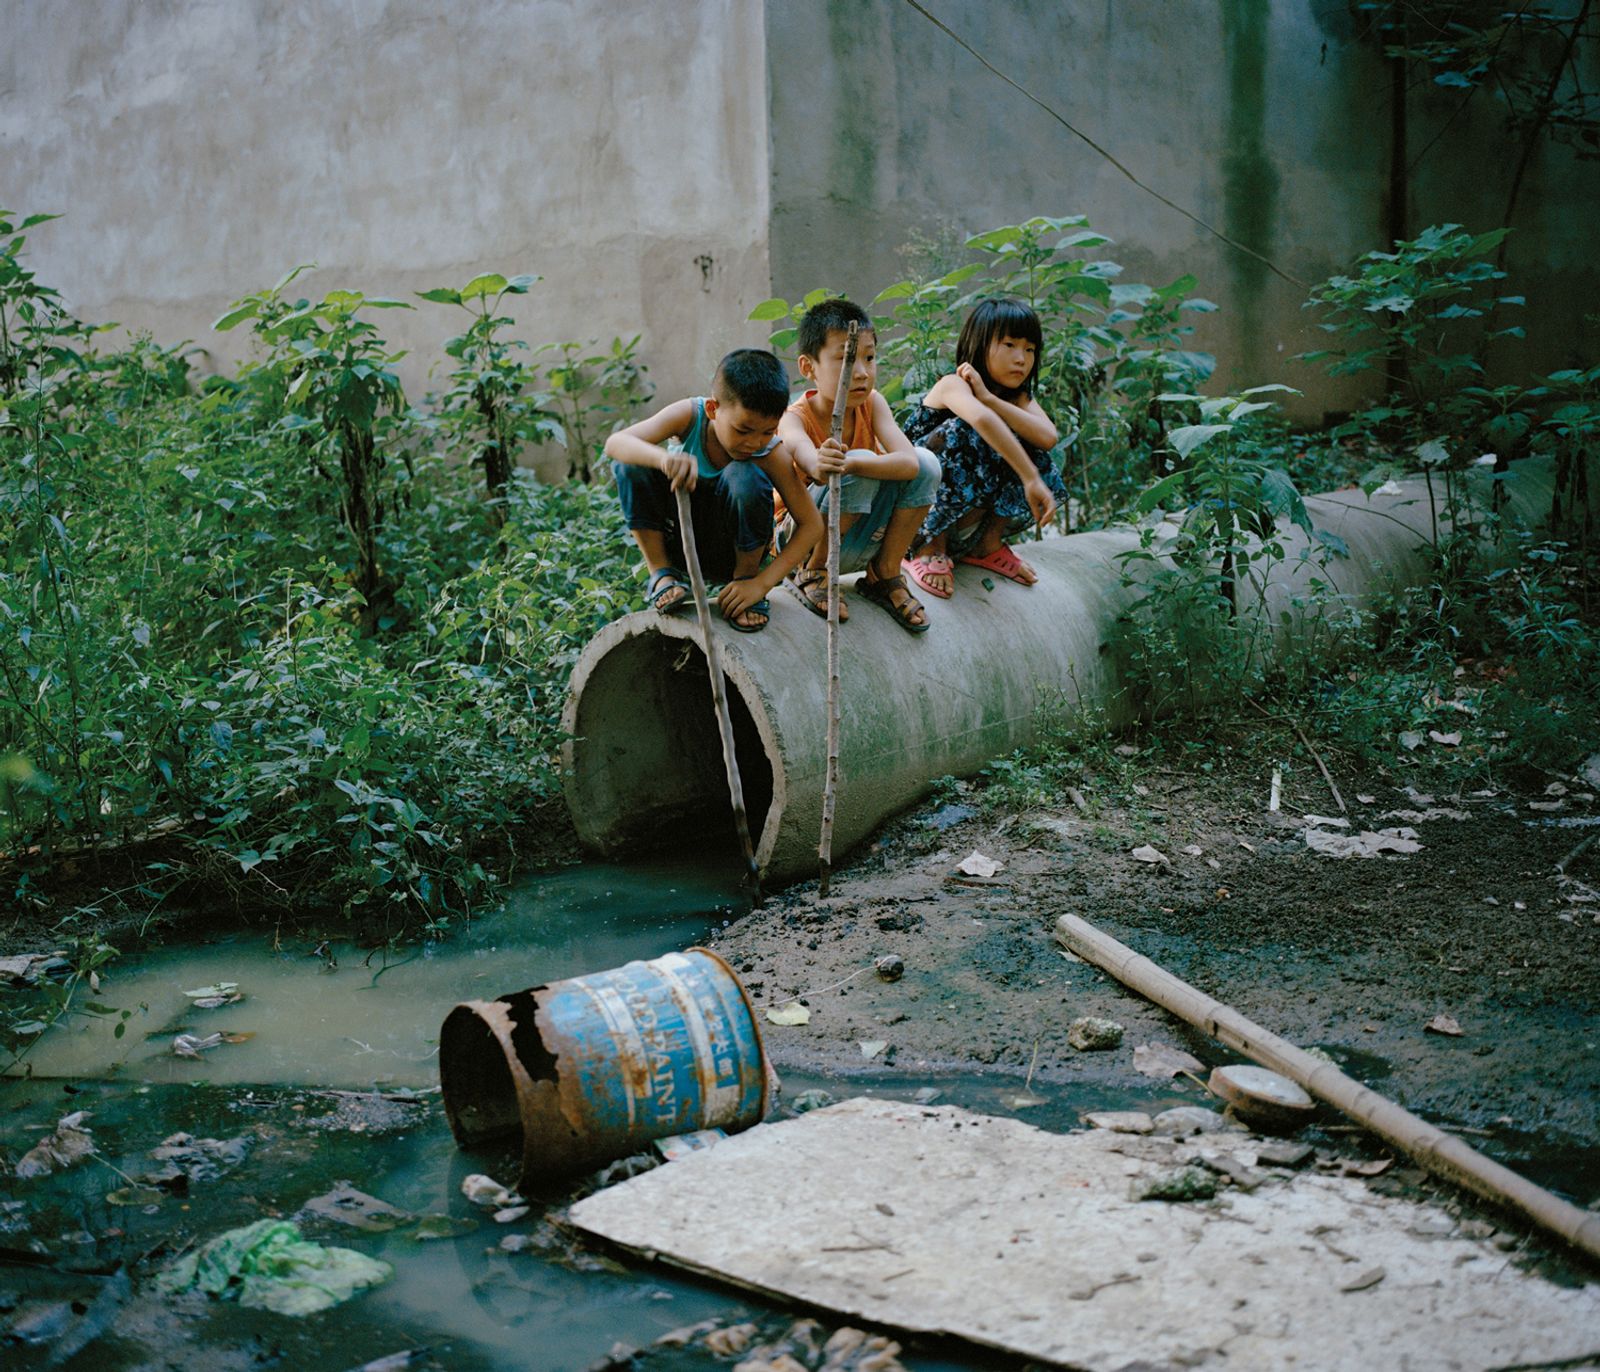 © Yangkun Shi - Image from the solastalgia photography project